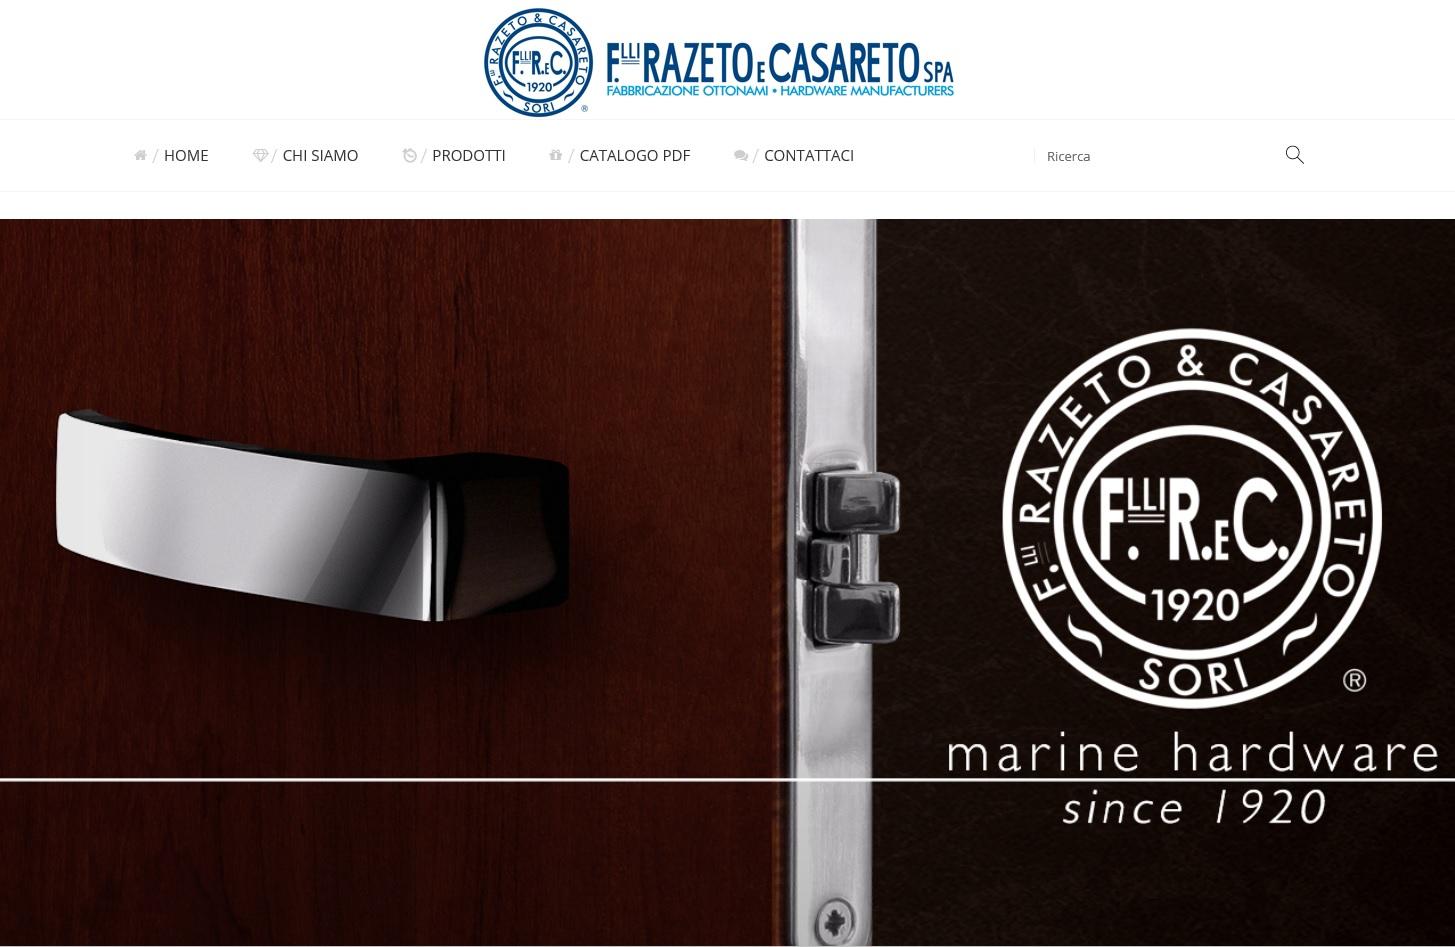 F.lli Razeto & Casareto new website